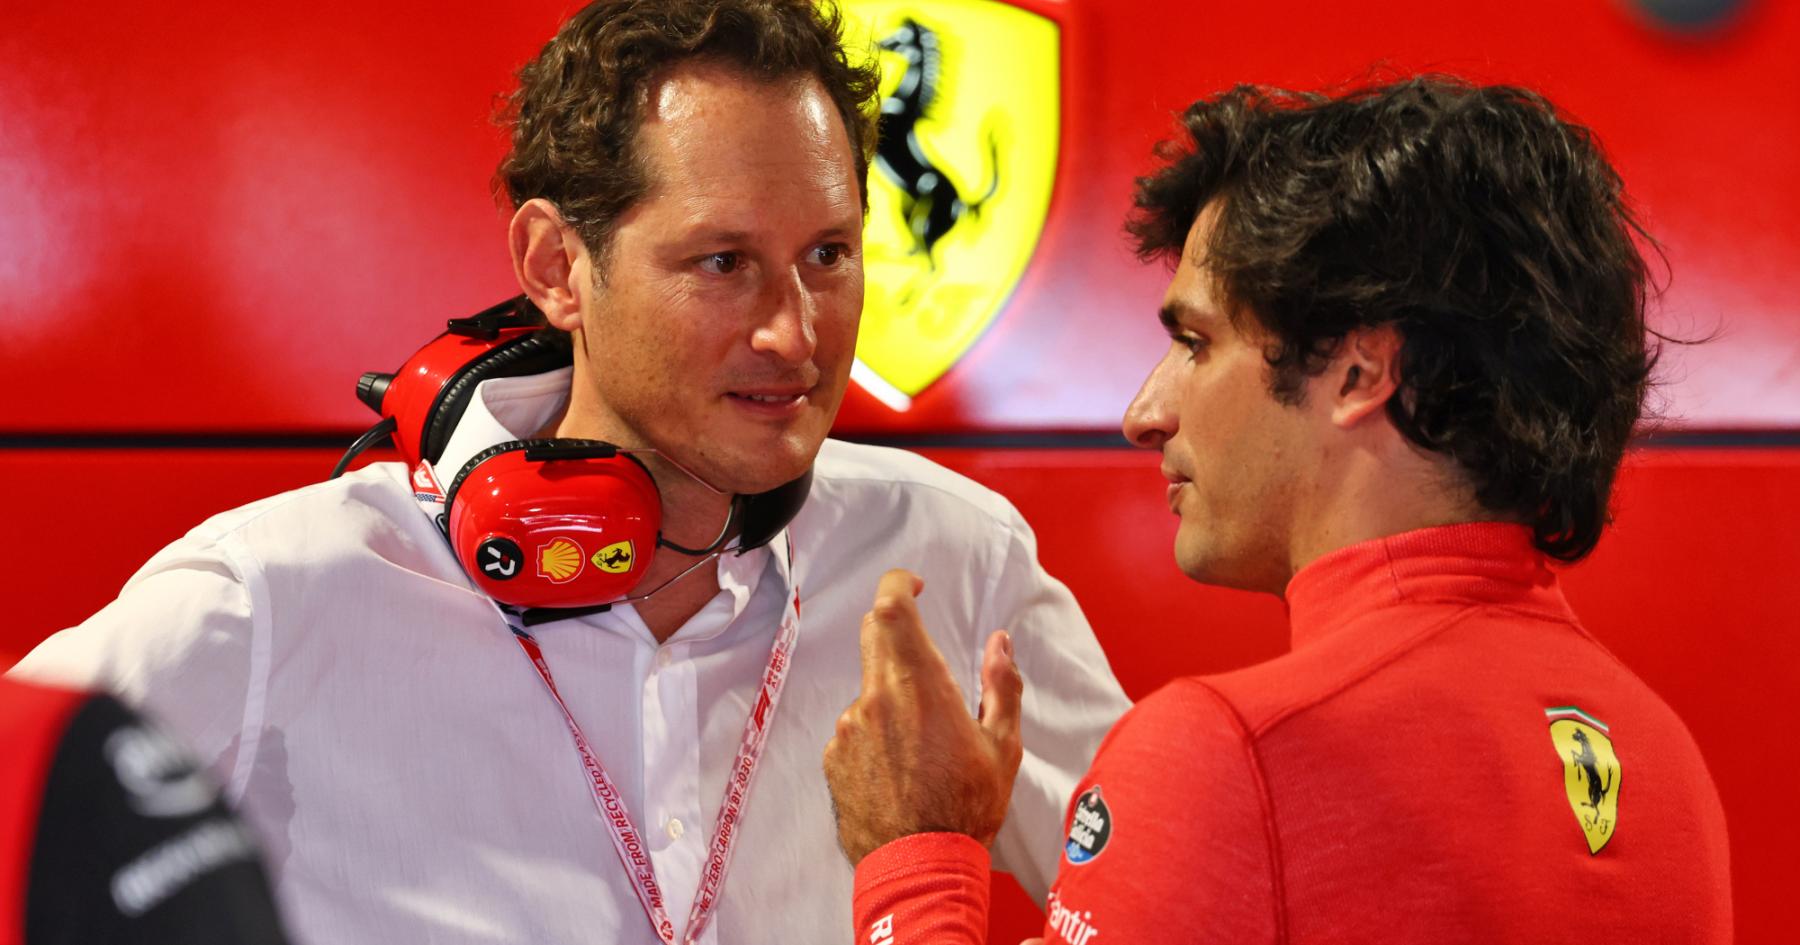 Revving Up Success: Ferrari CEO Sets Sights on Historic Win to Propel F1 Team Forward